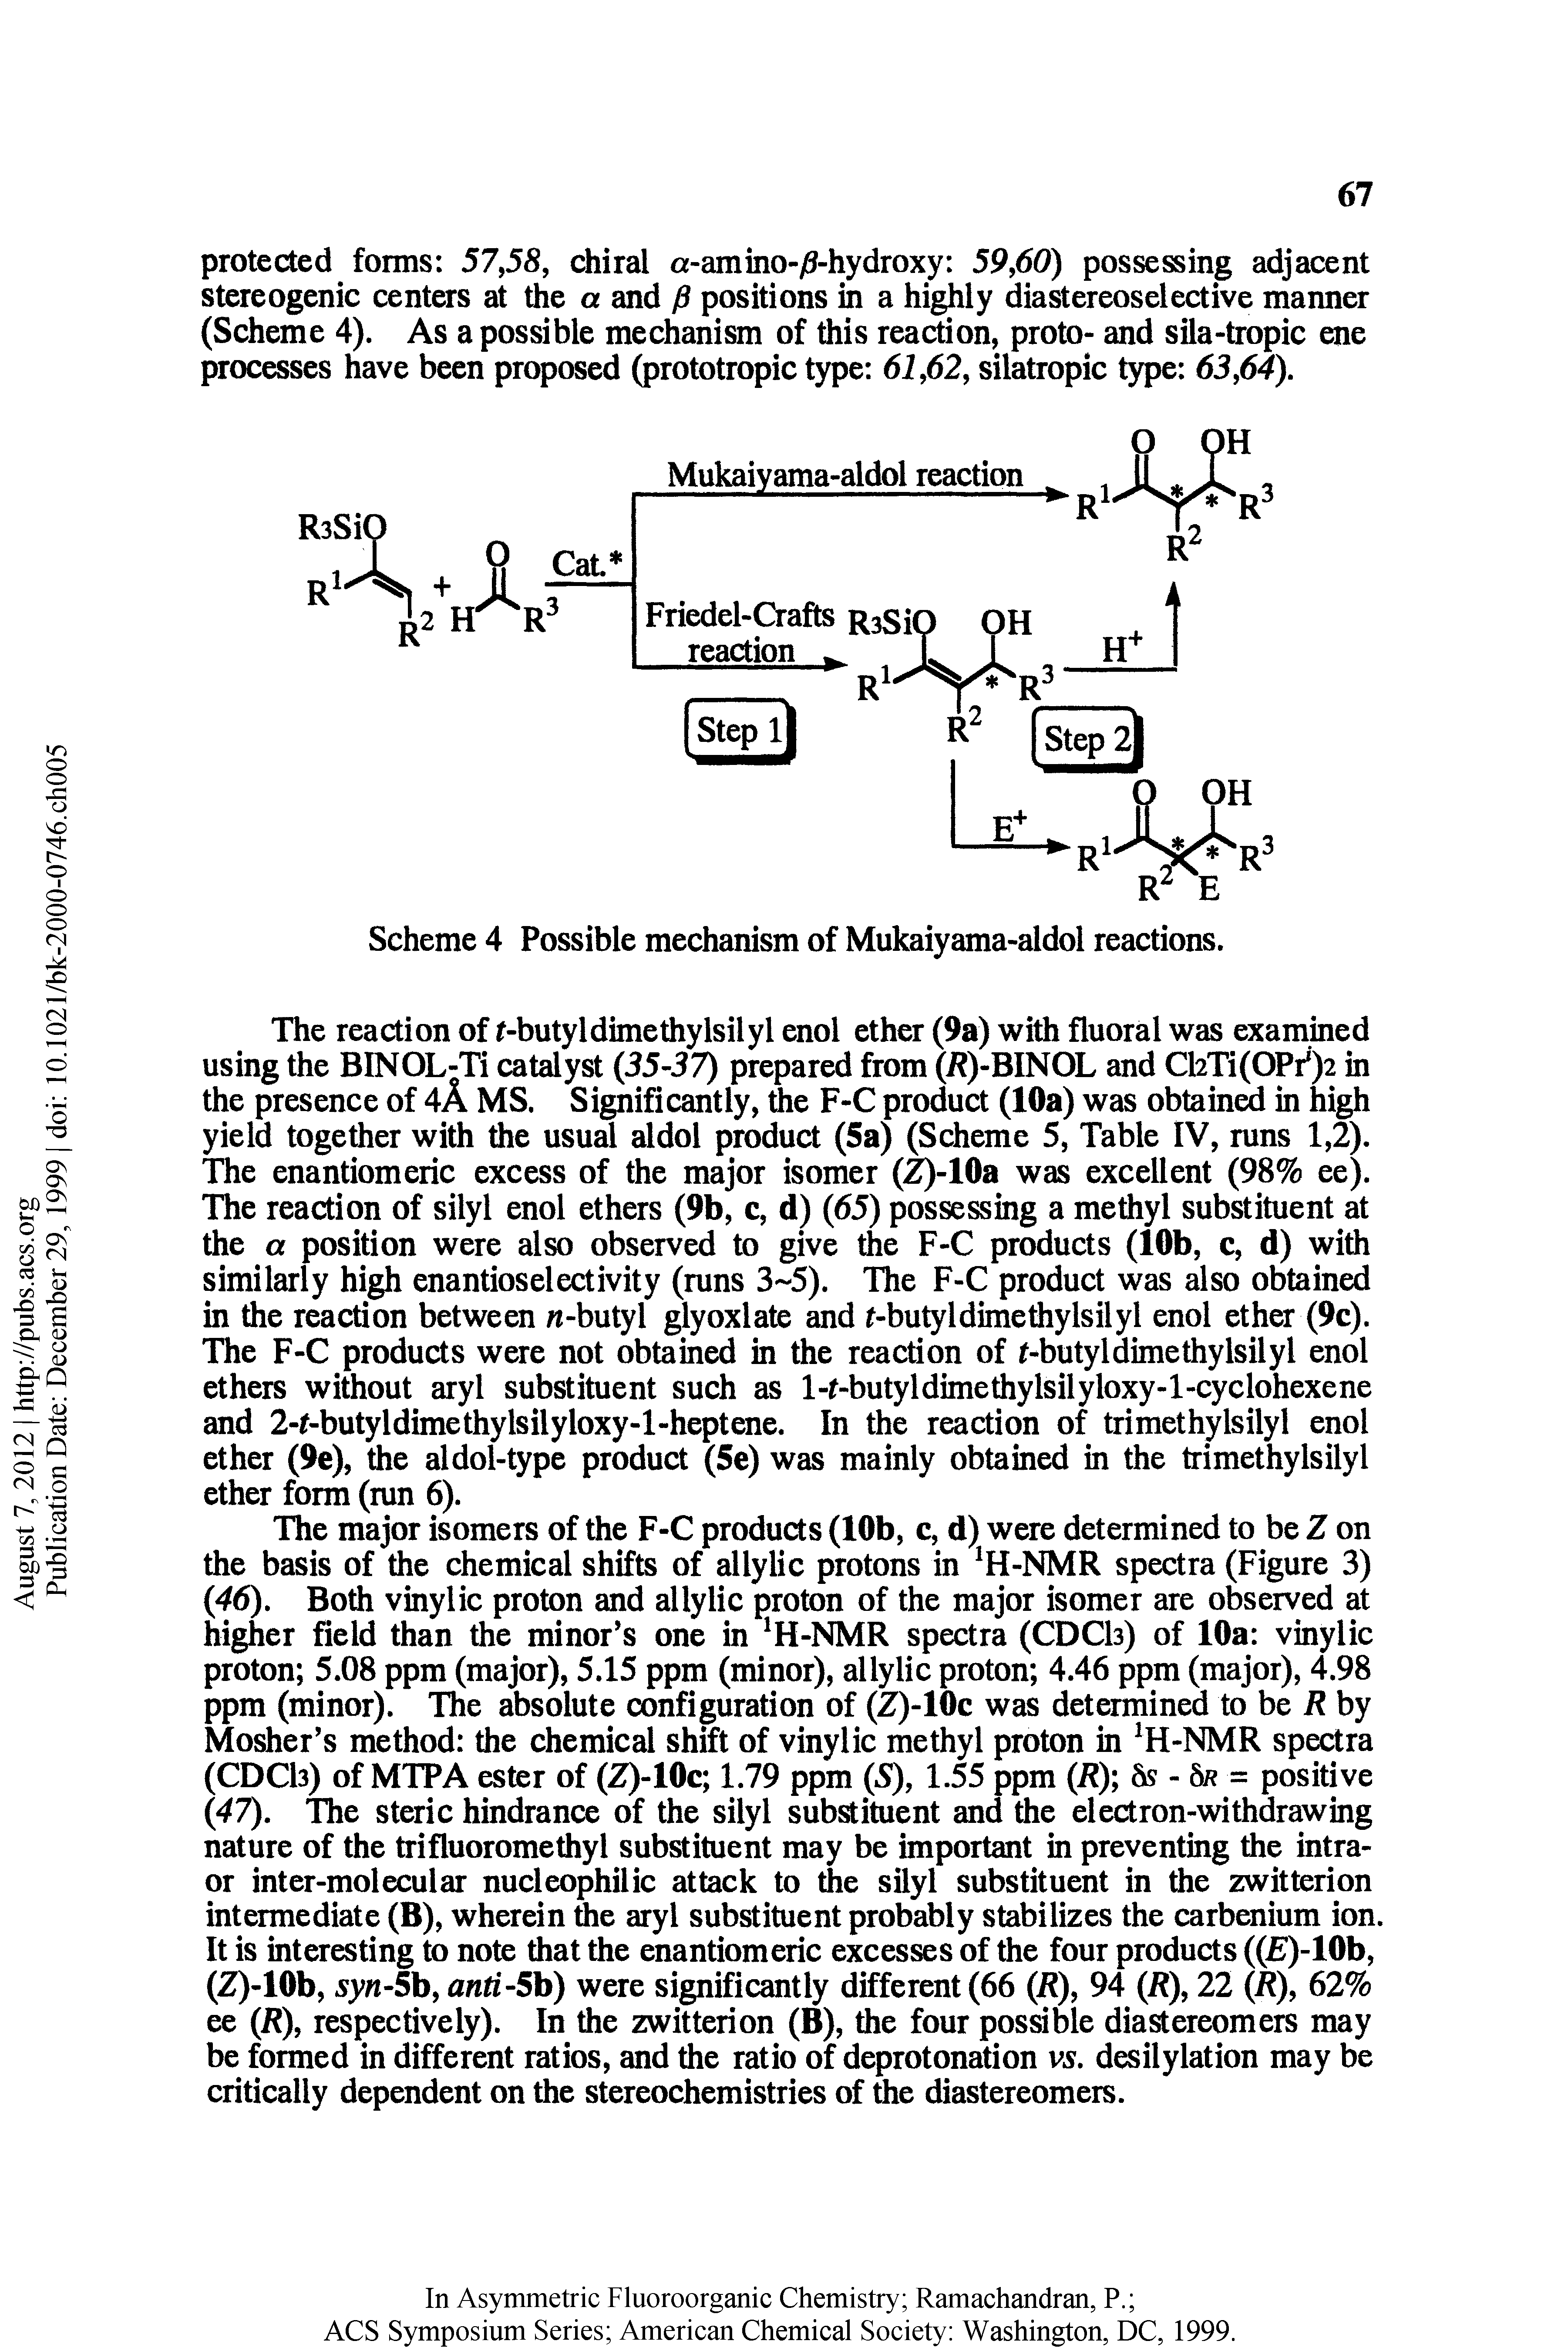 Scheme 4 Possible mechanism of Mukaiyama-aldol reactions.